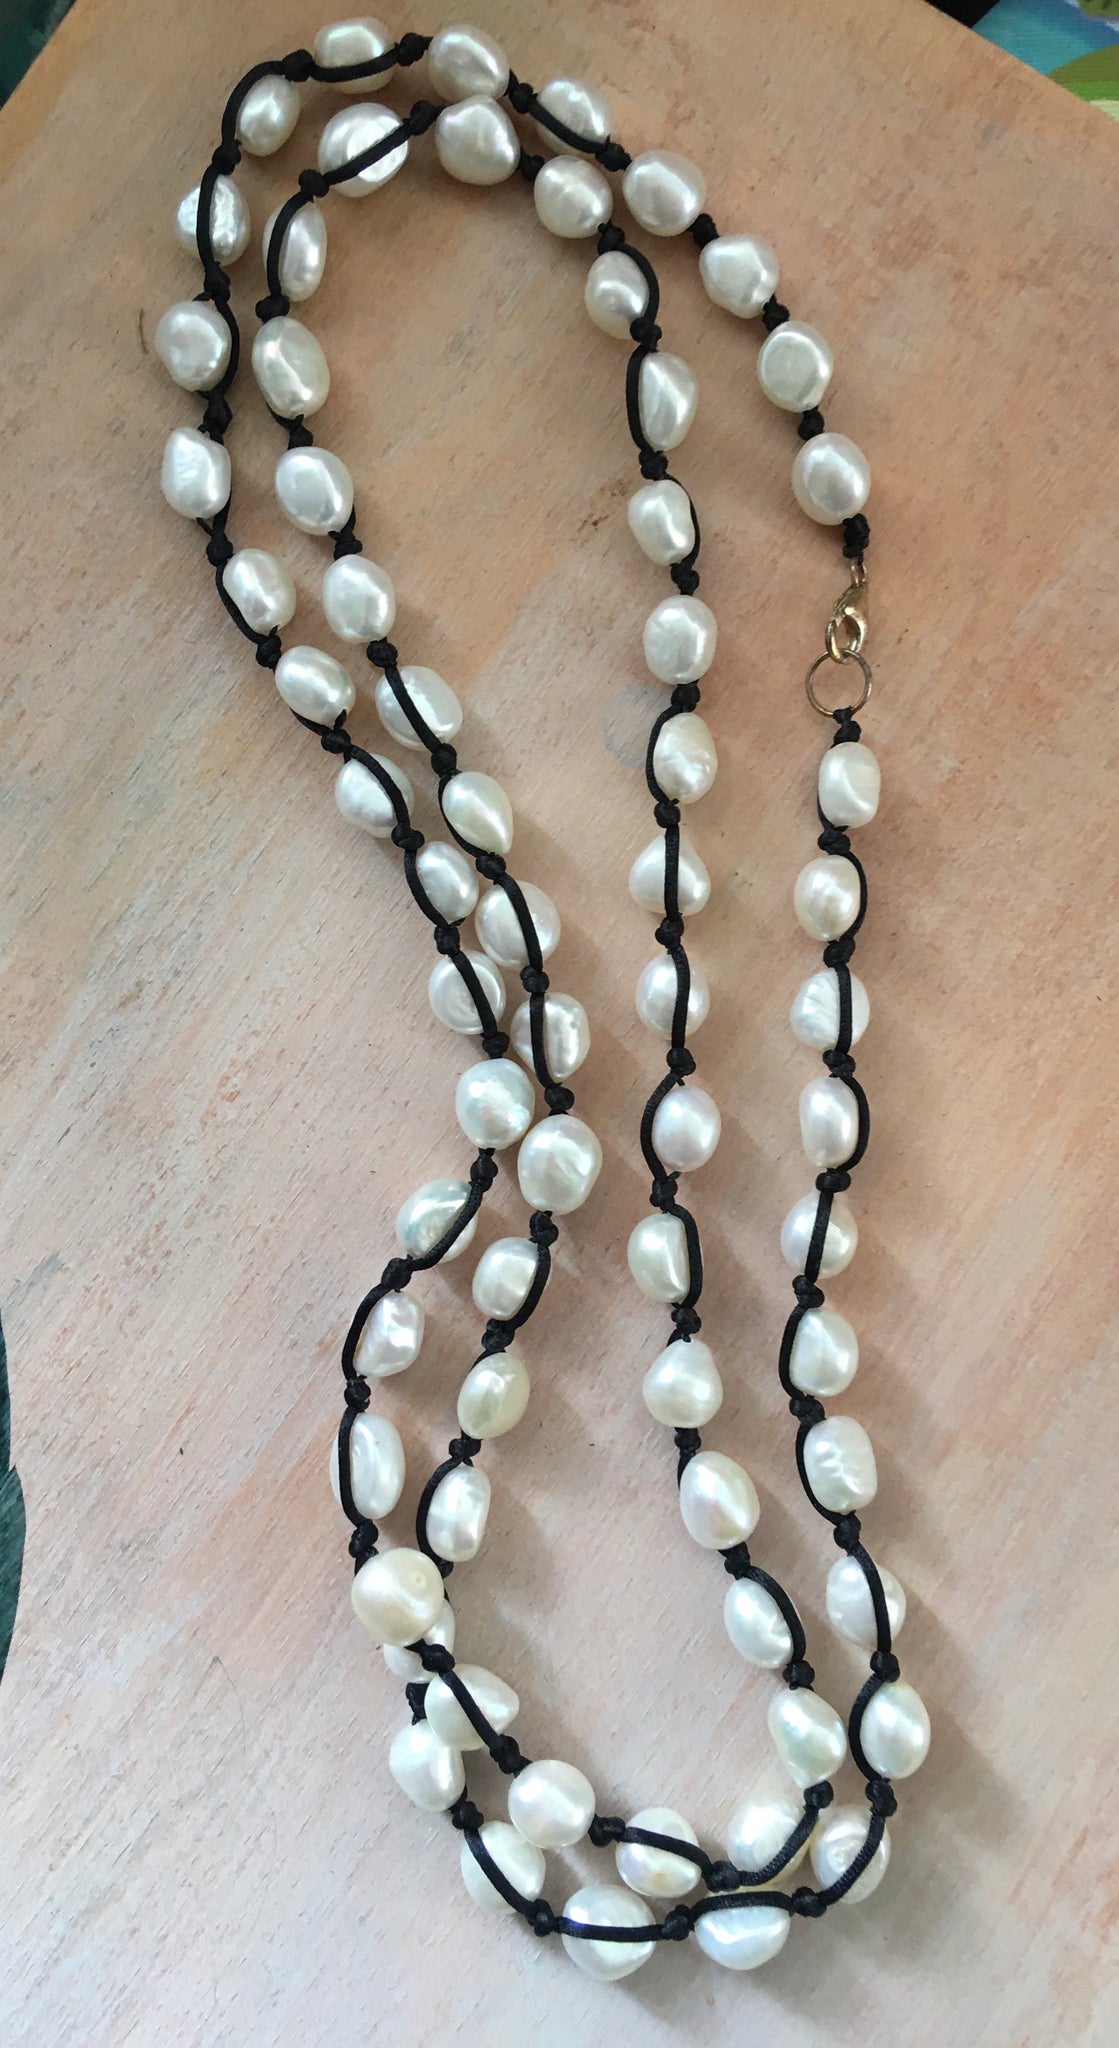 Knotted semi precious pearls